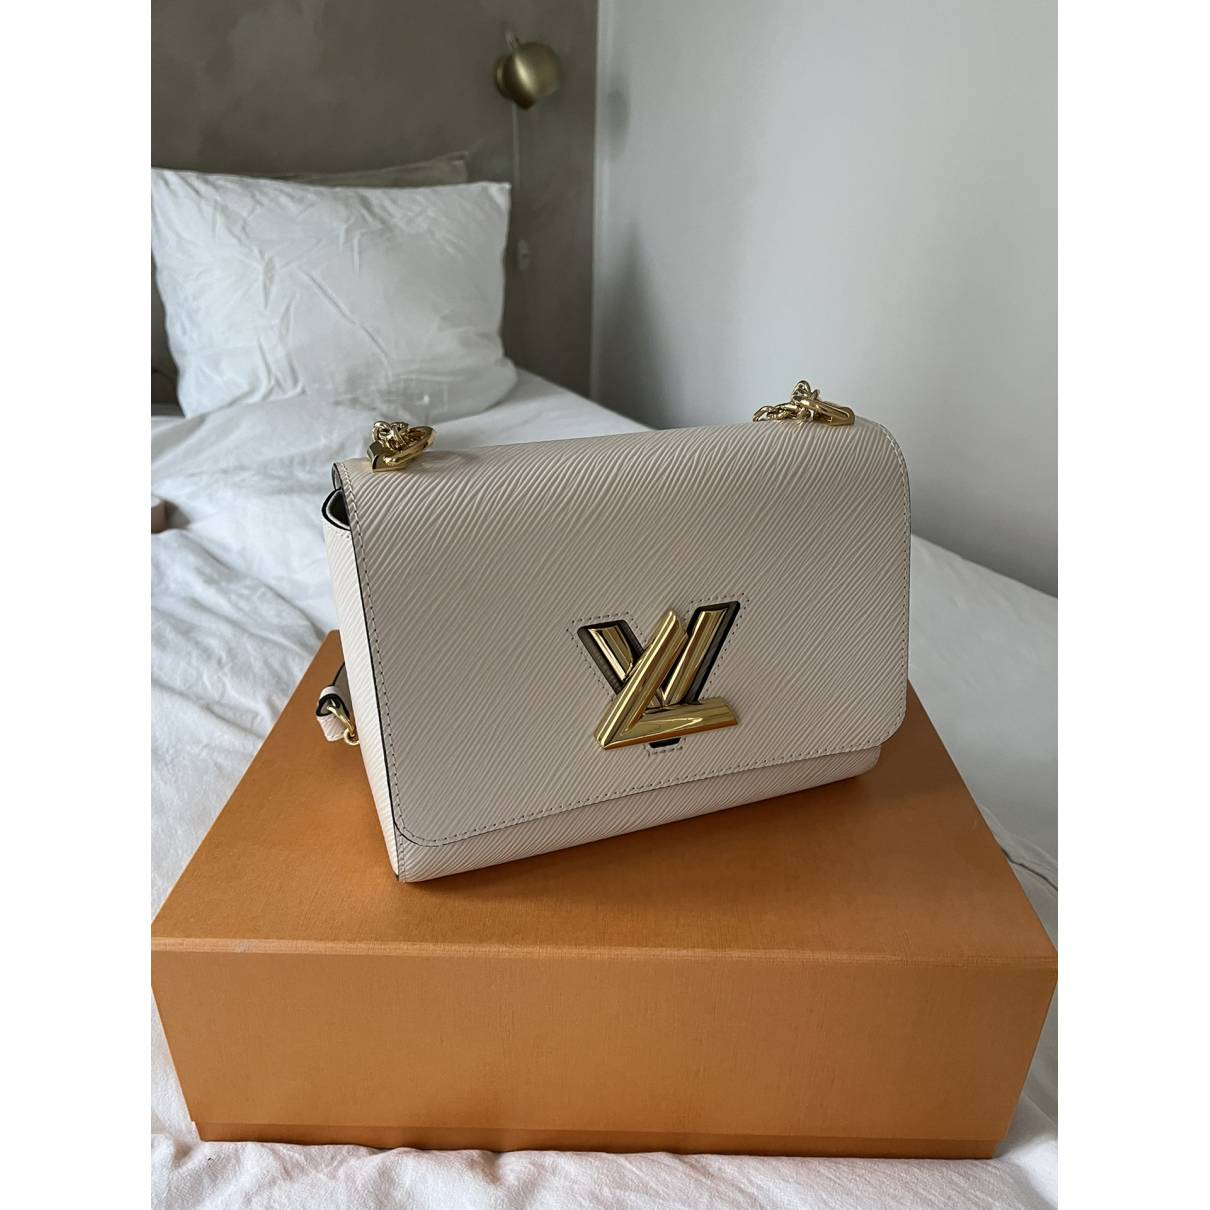 Louis Vuitton - Authenticated Twist Handbag - Leather Beige Plain for Women, Very Good Condition